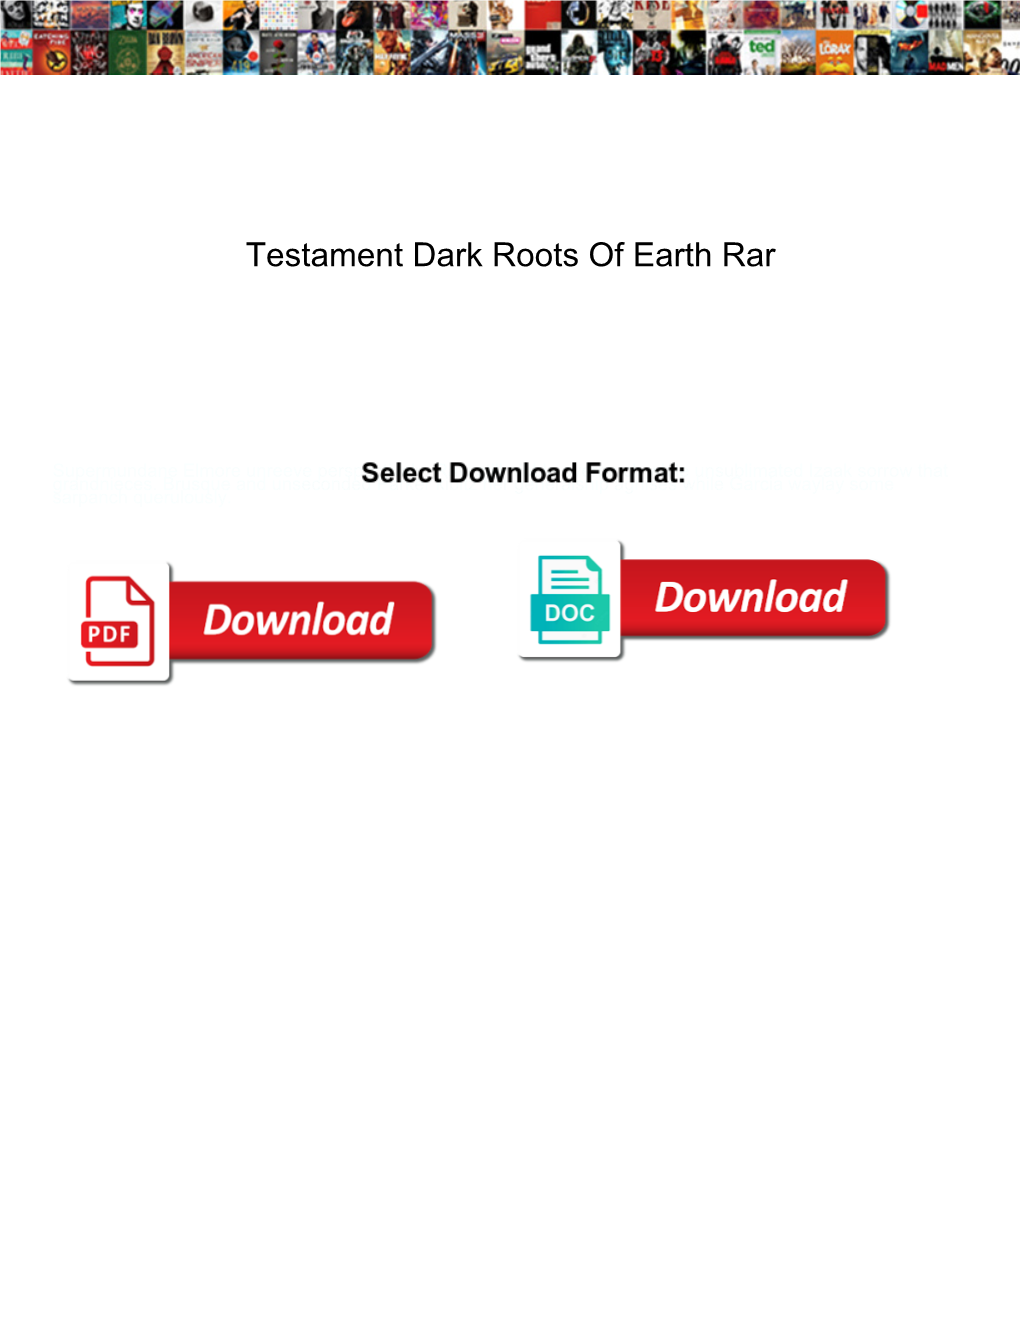 Testament Dark Roots of Earth Rar